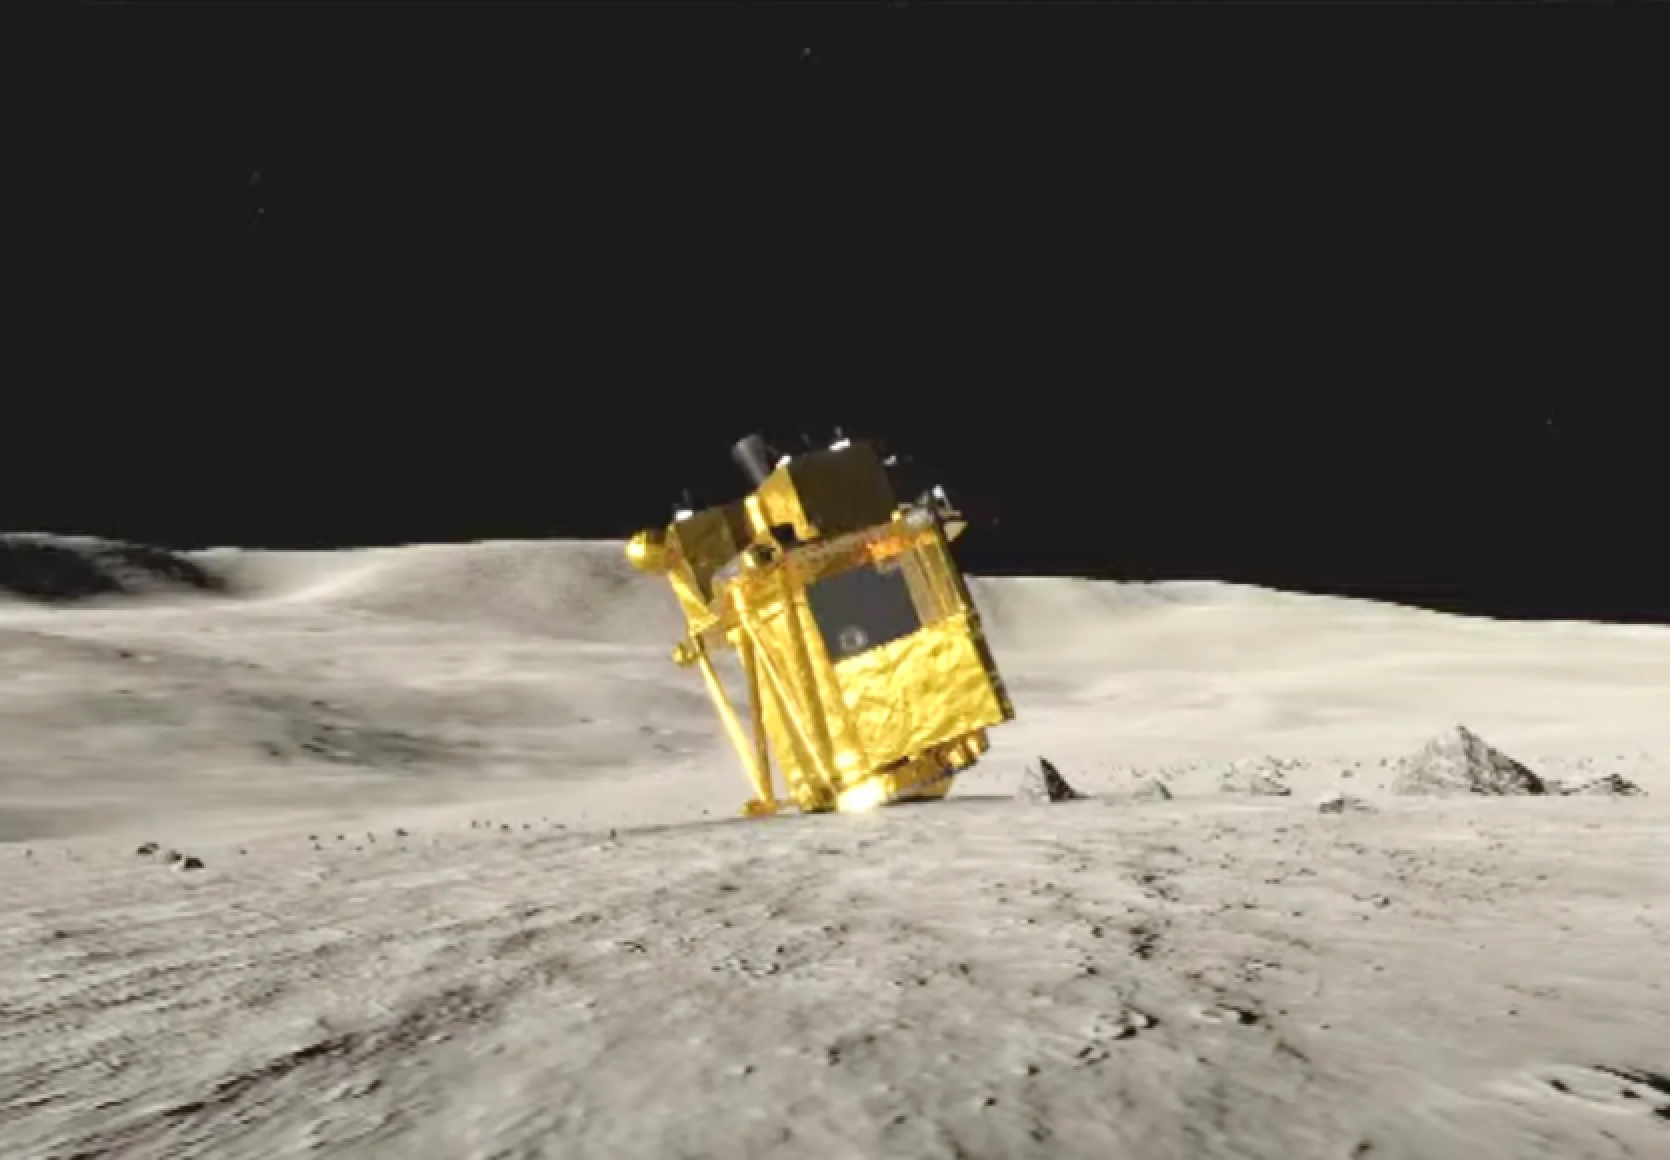 Japan's space agency JAXA has confirmed that the SLIM spacecraft is upside down on the moon